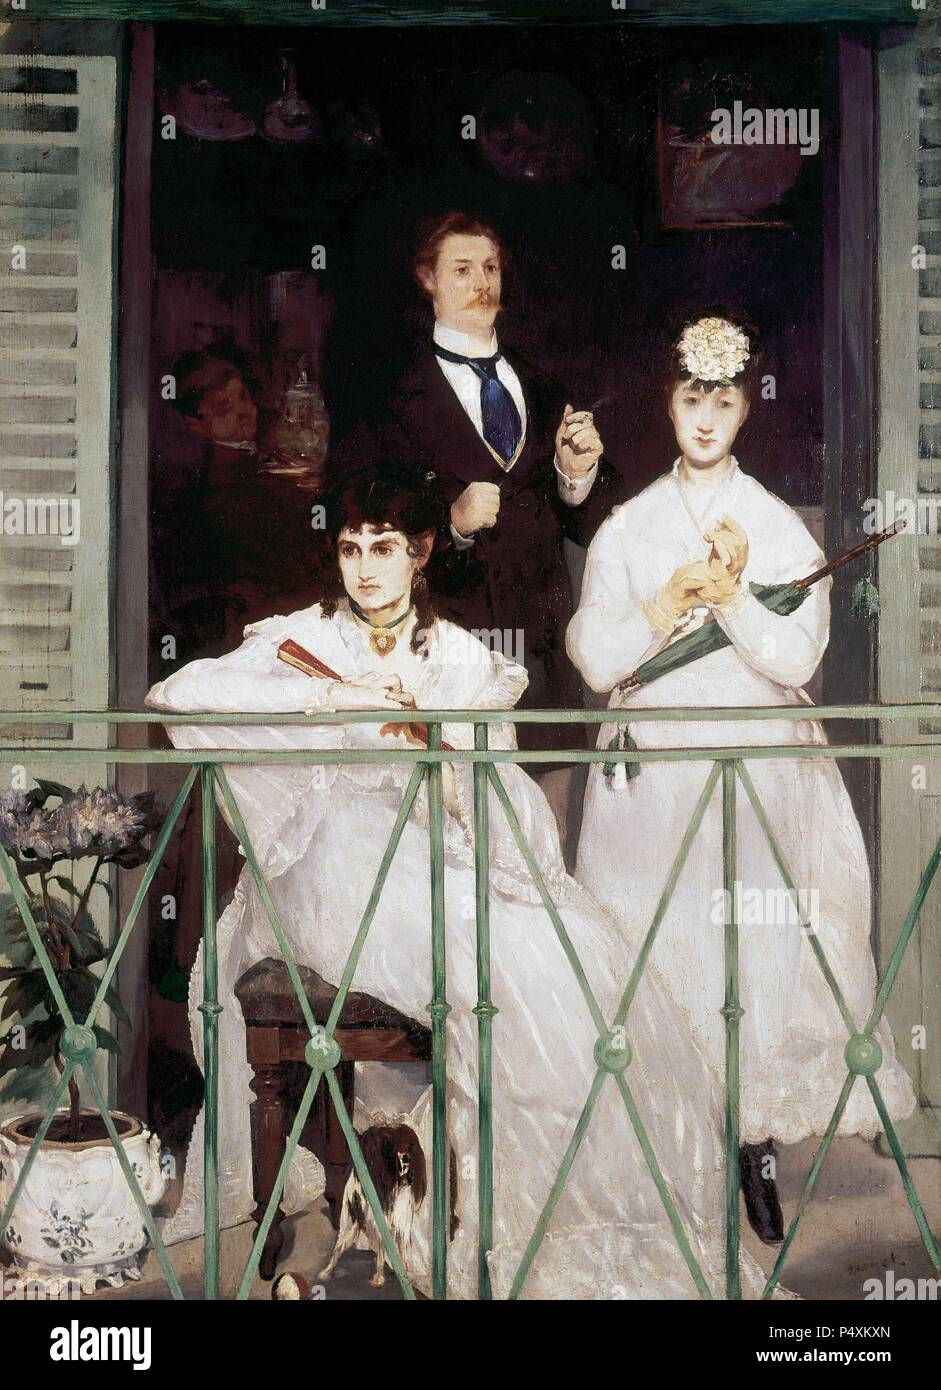 ARTE S. XIX. FRANCIA. MANET, Edouard (París,1832-París,1883). Pintor y grabador francés en estilo impresionista. 'EL BALCON' (1868) . Stock Photo